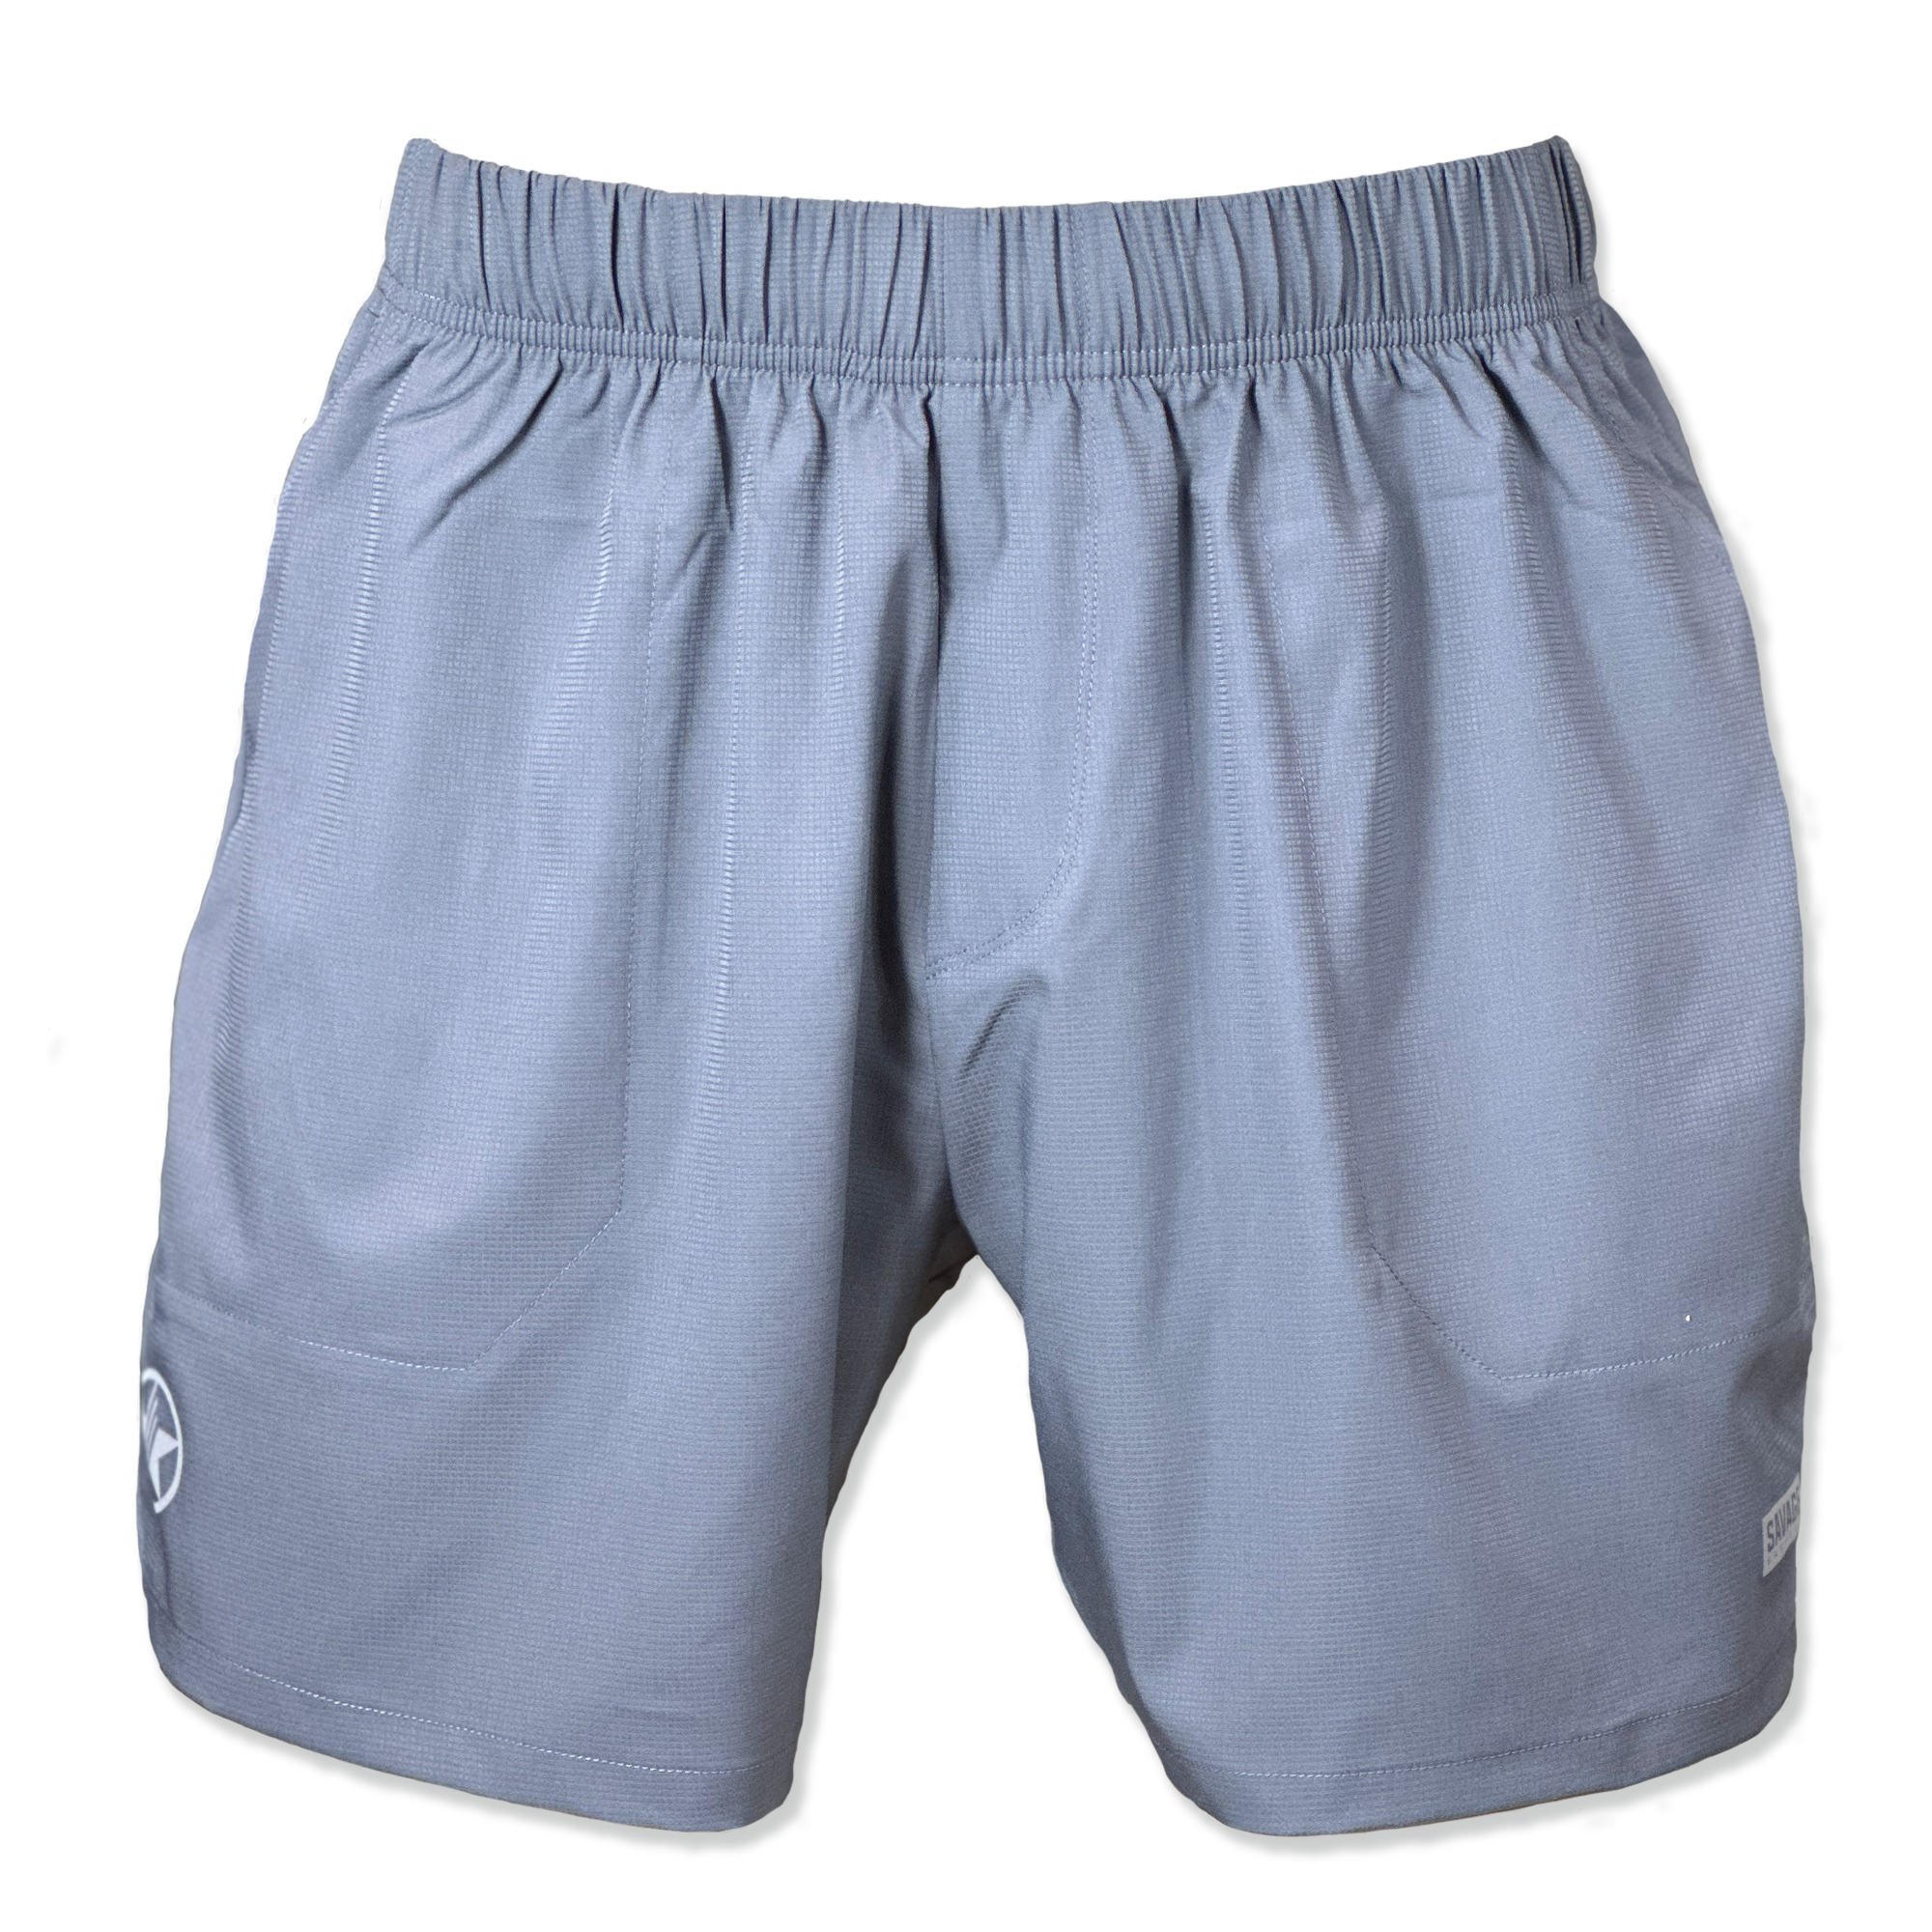 Men's Shorts - Competition 3.0 - Flint Gray, 2X-Large / Flint Gray product